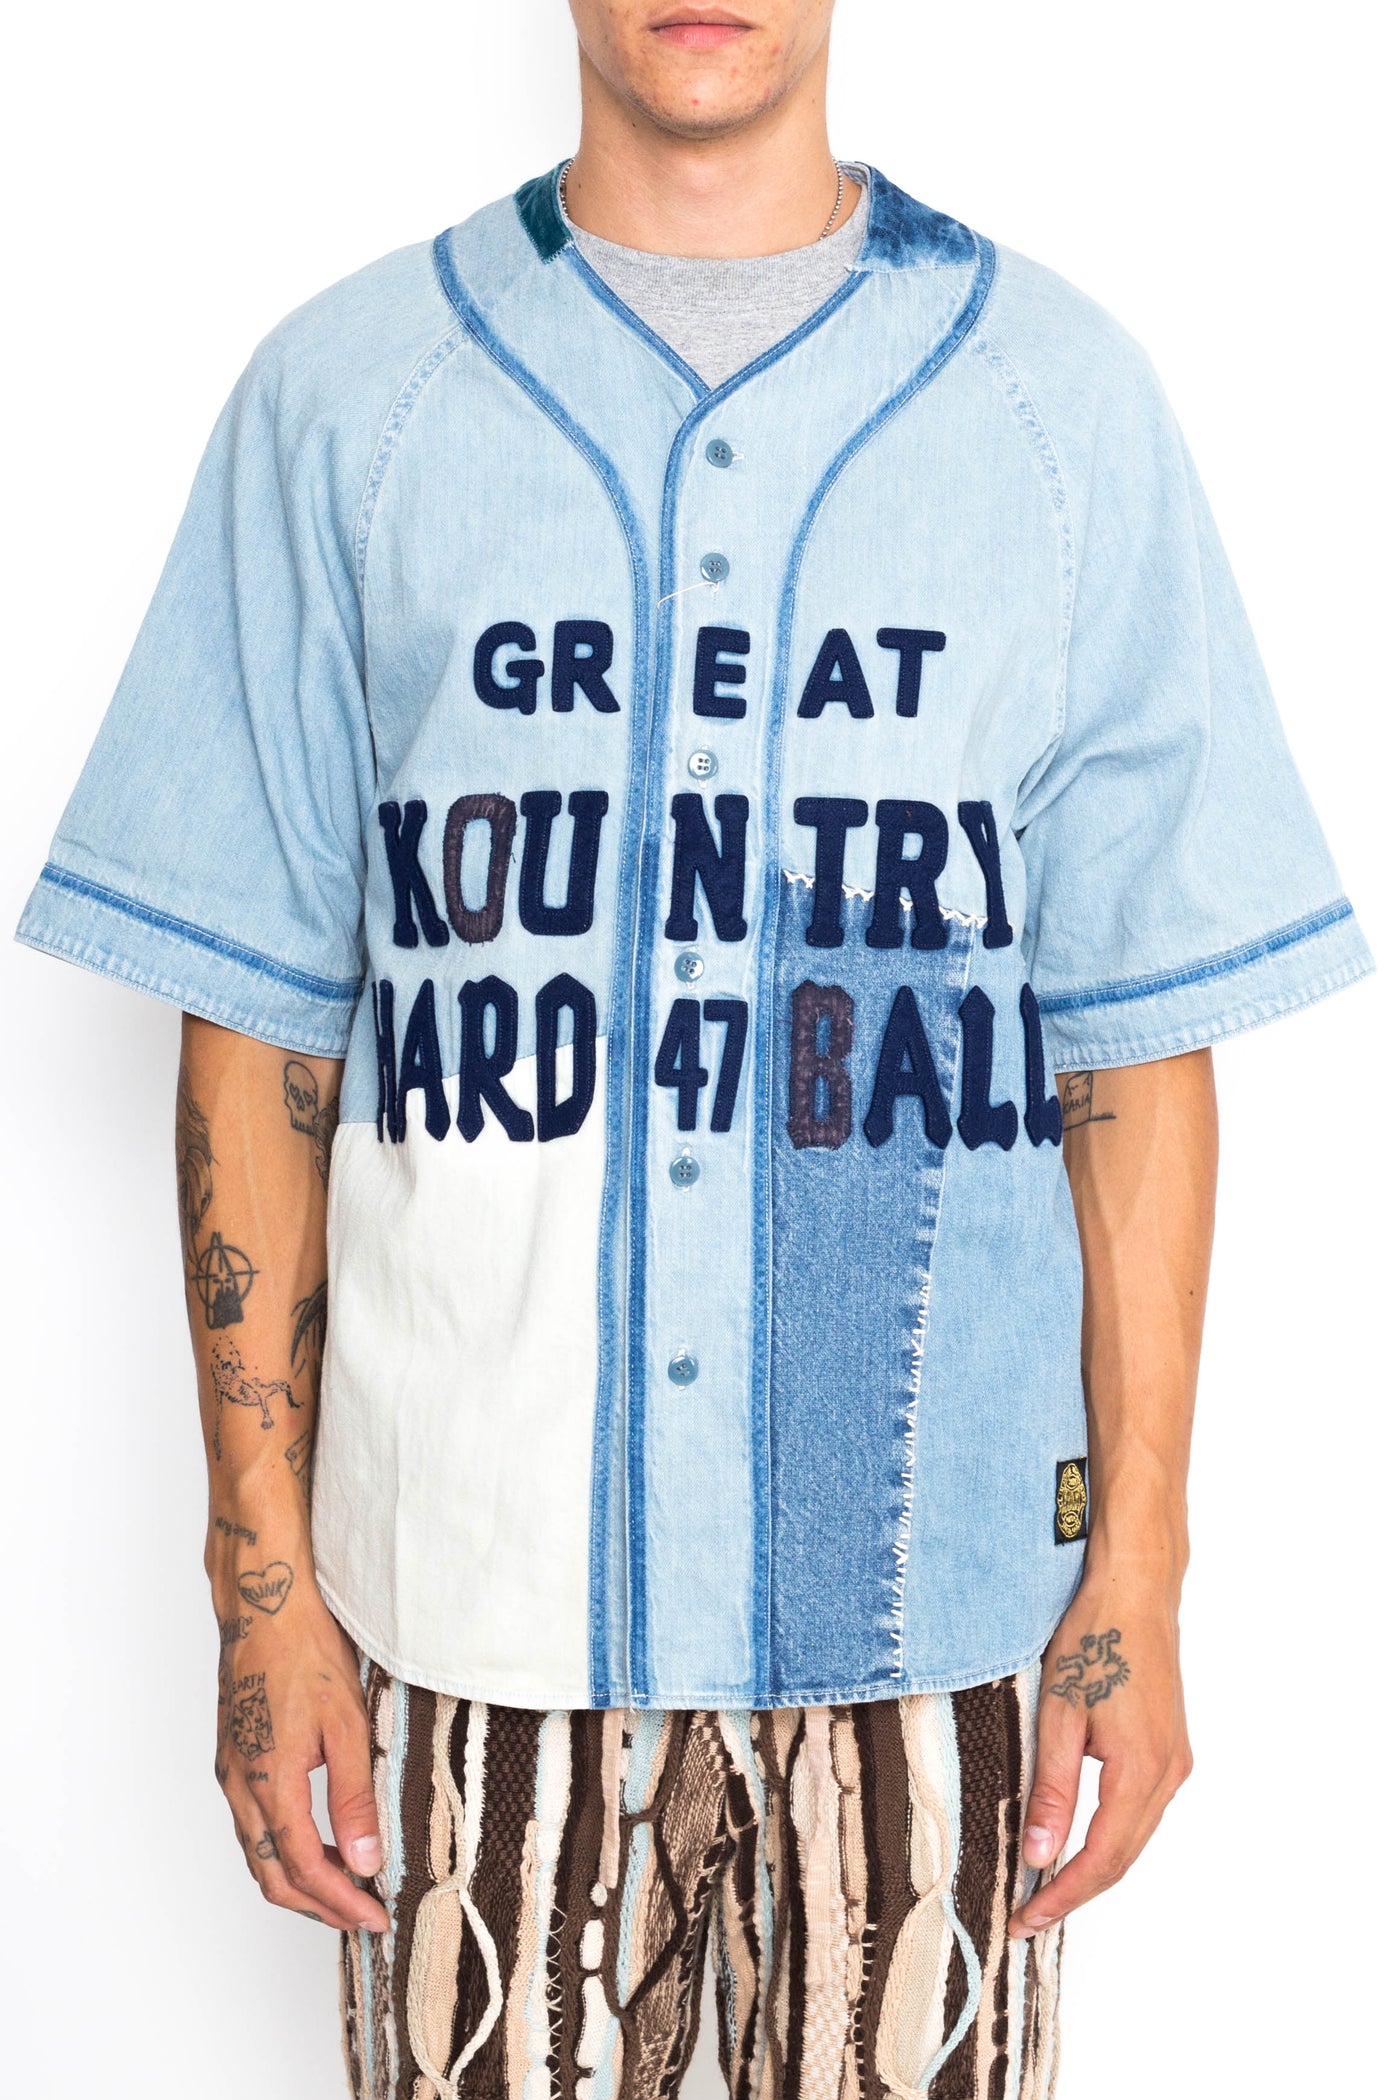 8oz Reconstruction Denim GREAT KOUNTRY Baseball Shirt